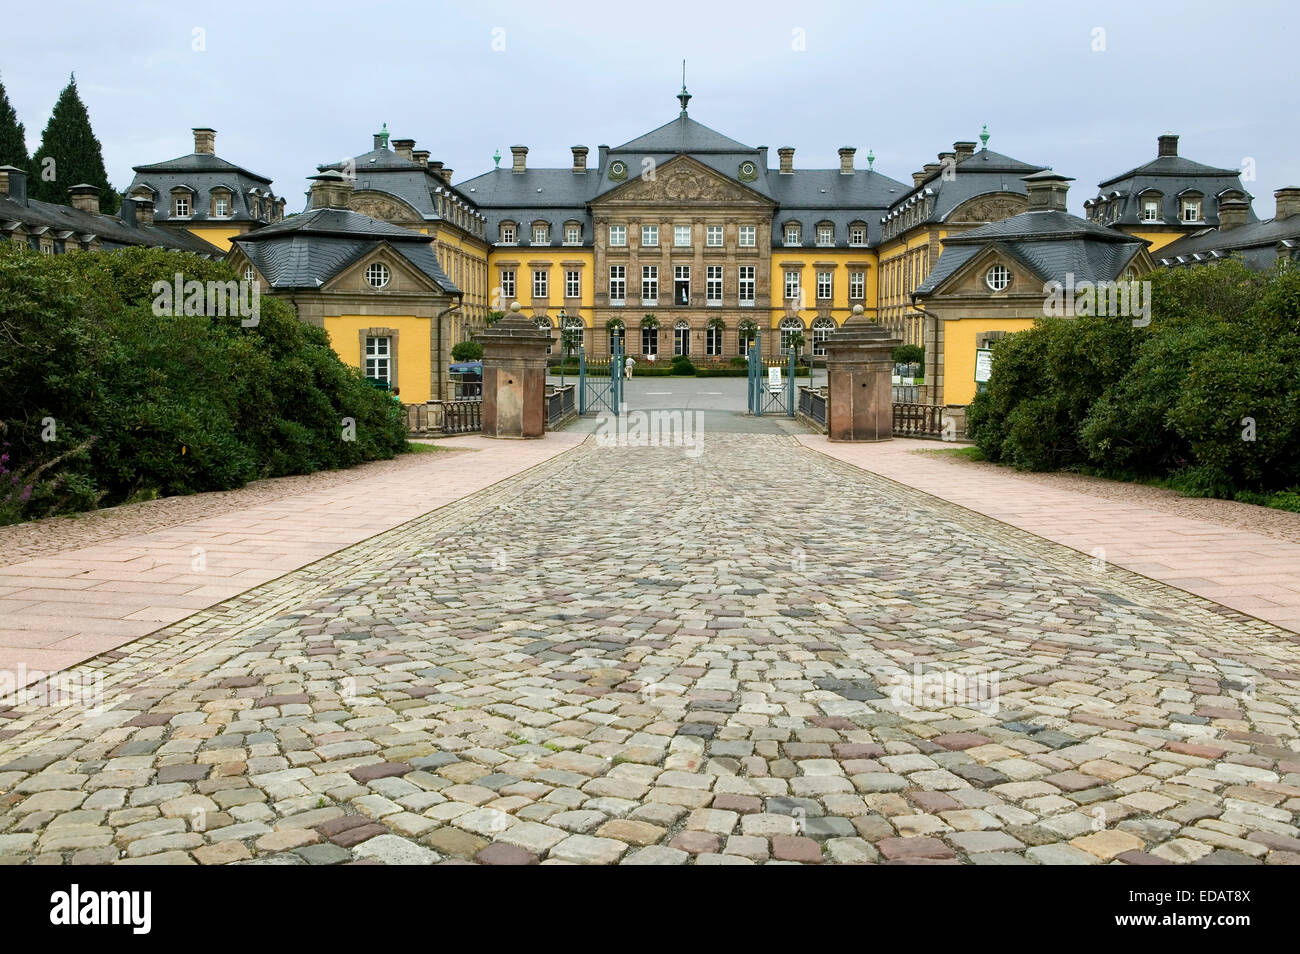 Ingresso a Schloss Arolsen Castello, Hesse, Germania, Europa, Einfahrt Zum Schloss Arolsen, Assia, Deutschland, Europa Foto Stock